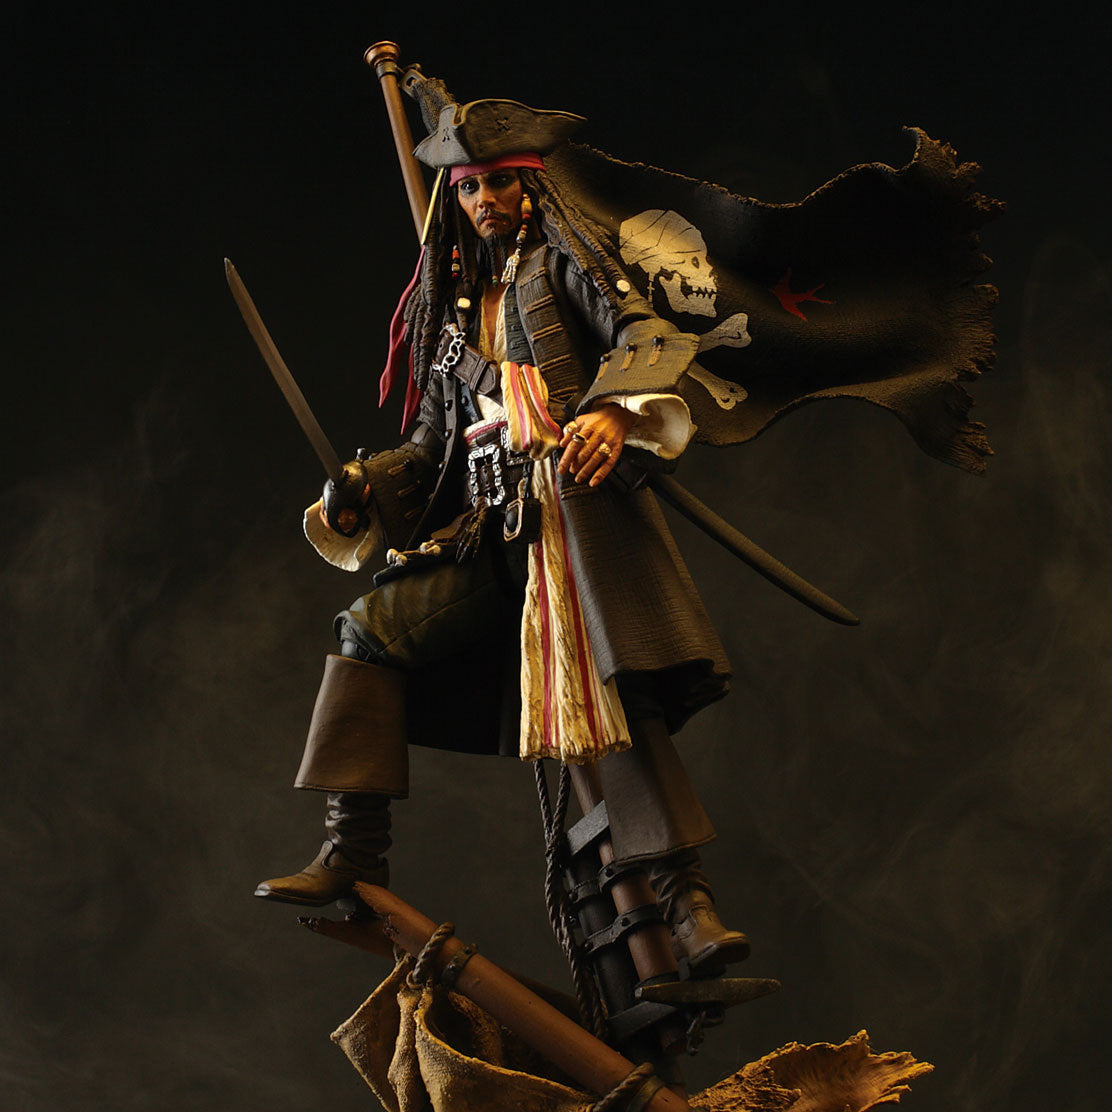 Kaiyodo - Revoltech - NR006 - Pirates of the Caribbean - Jack Sparrow - Marvelous Toys